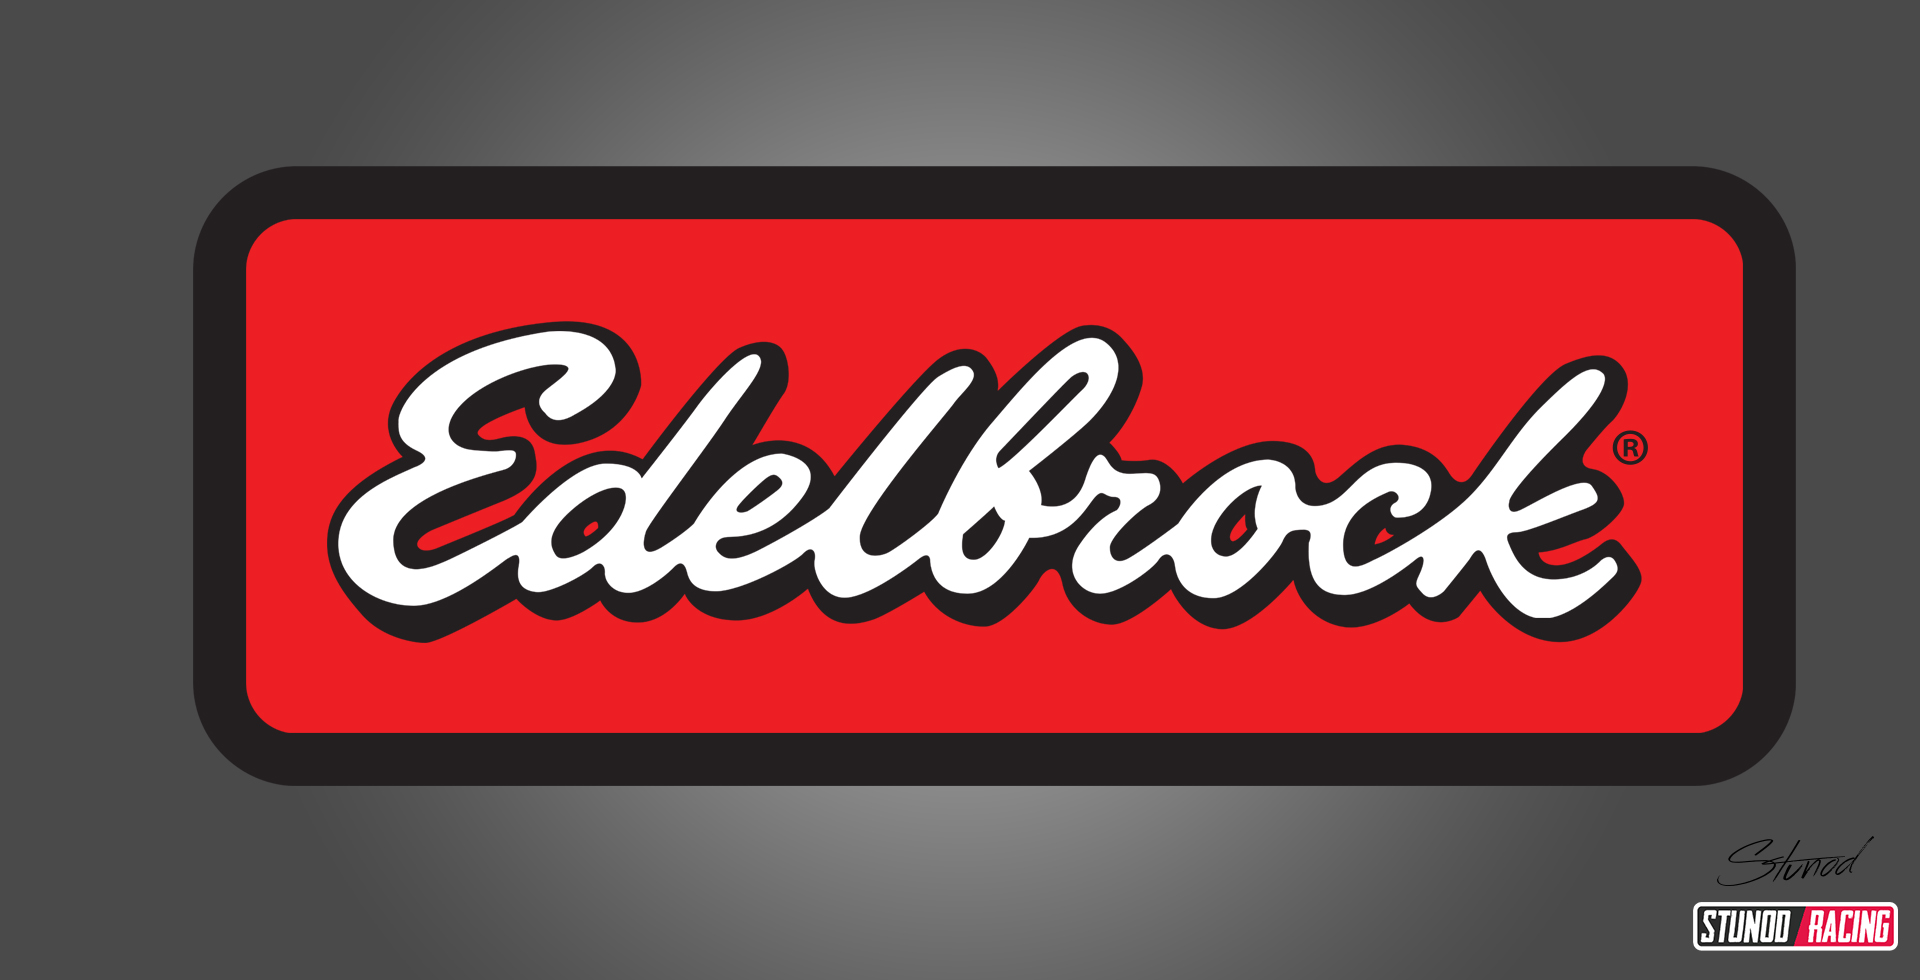 StunodRacing-Edelbrock-Logo.jpg